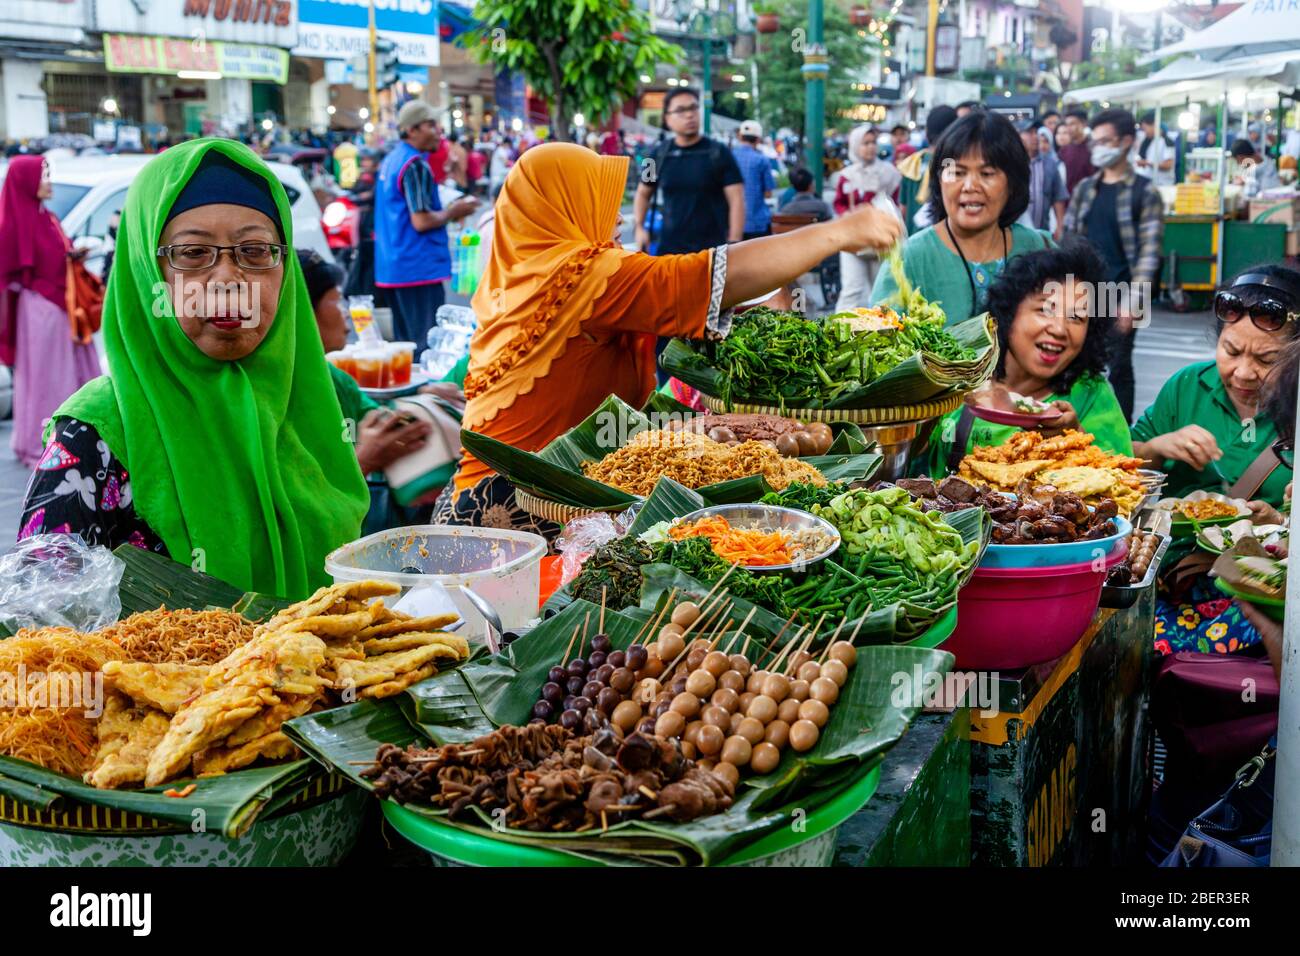 Ein farbenfroher Street Food-Stand, Malioboro Street, Yogyakarta, Indonesien. Stockfoto